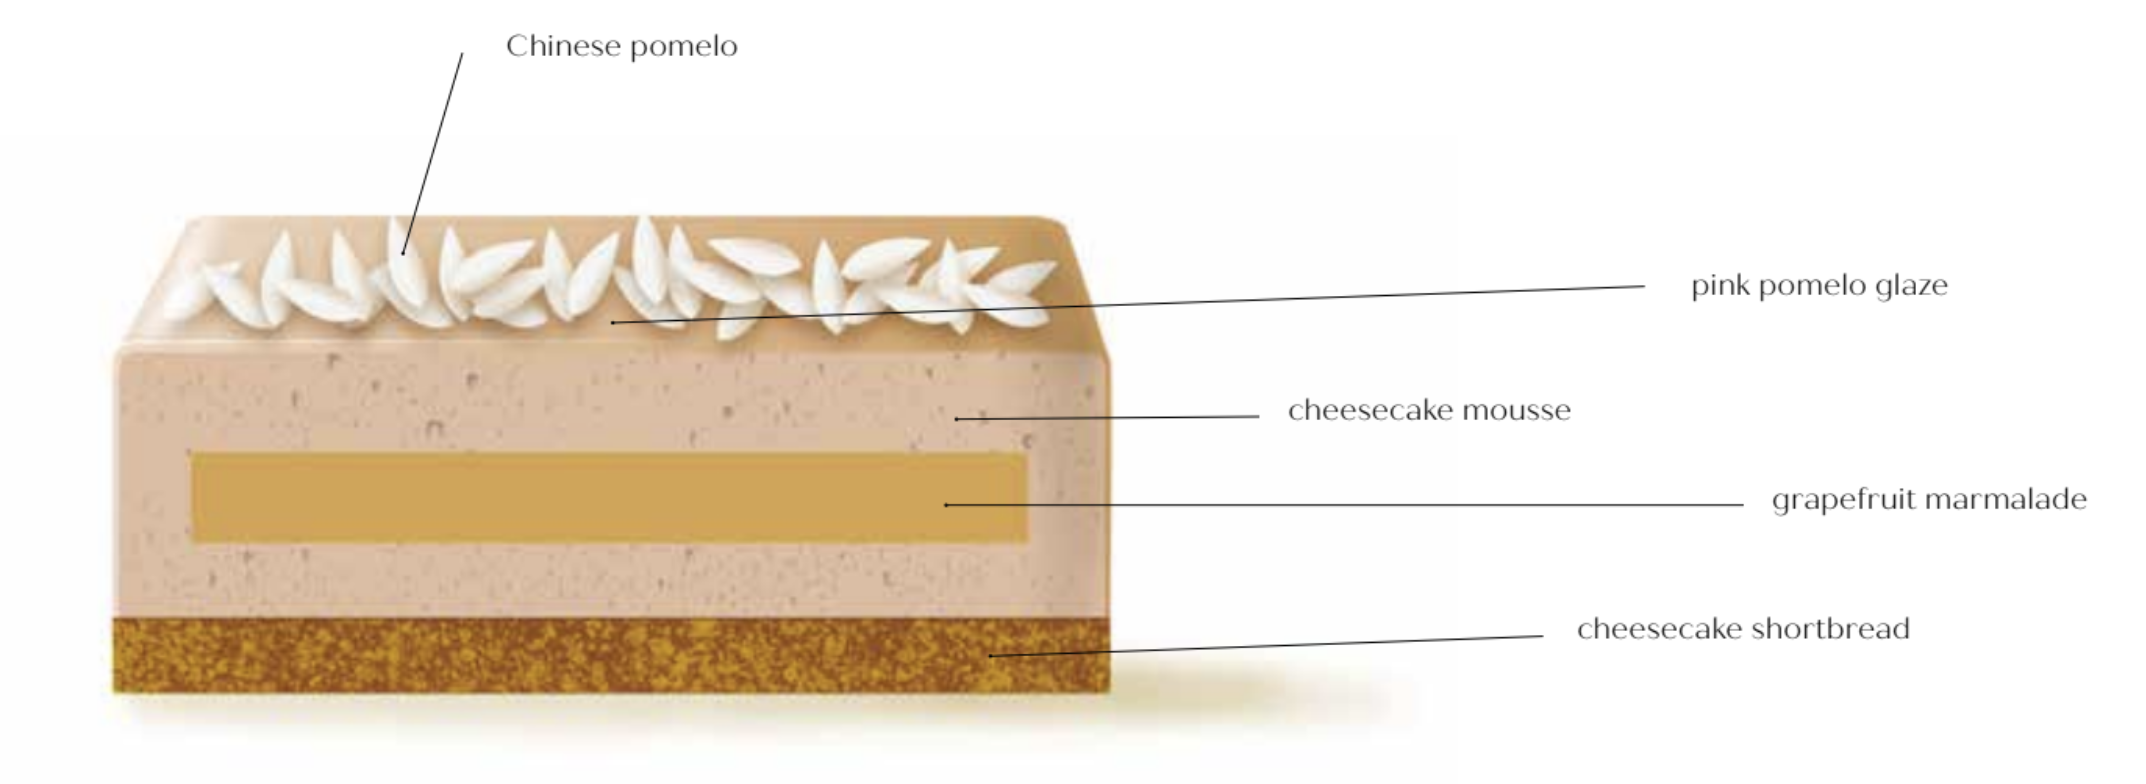 pomelo-cheesecake-graphic